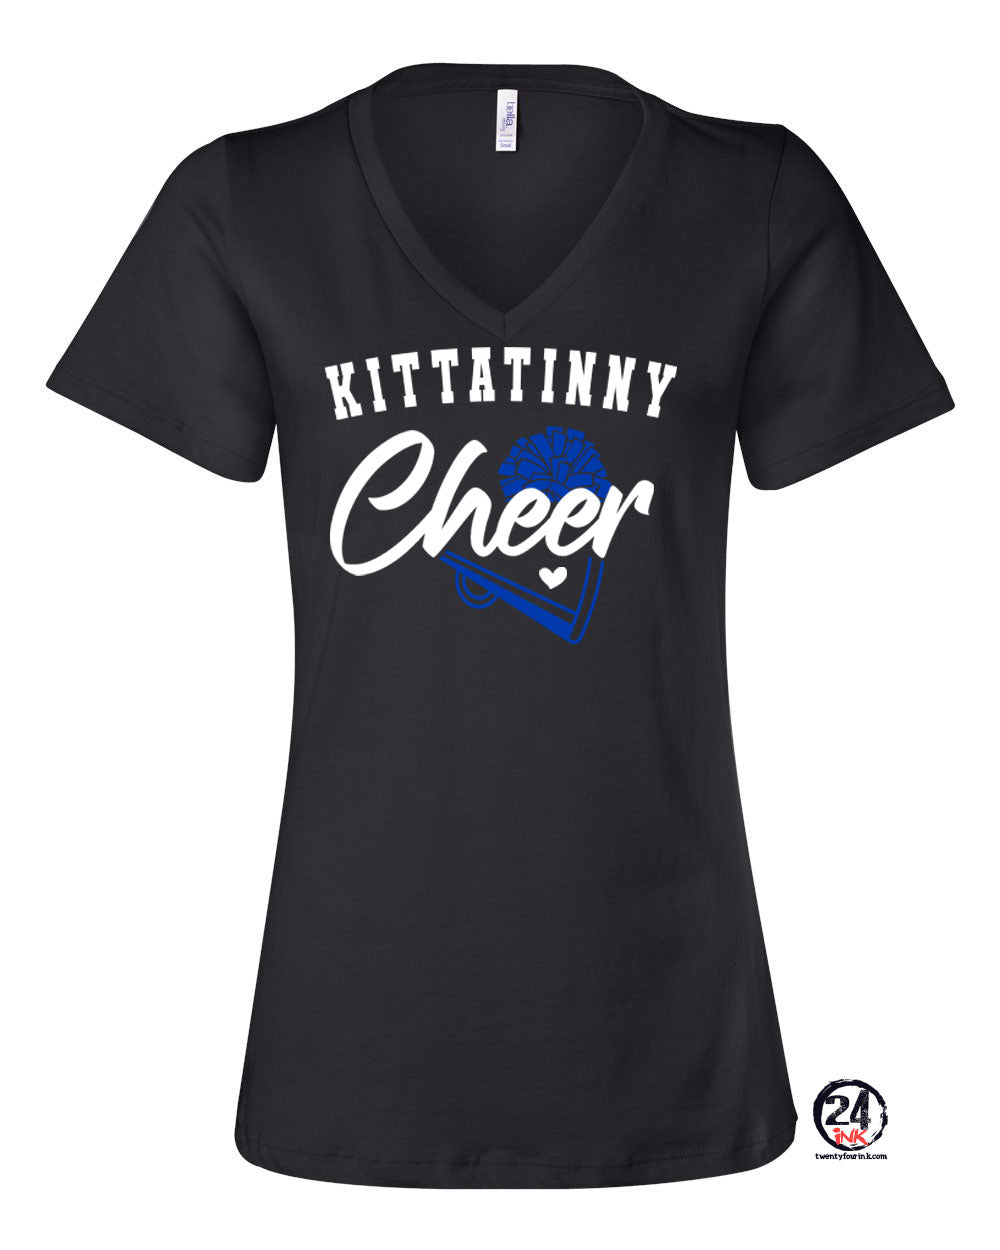 Kittatinny Cheer Design 9 V-neck T-Shirt